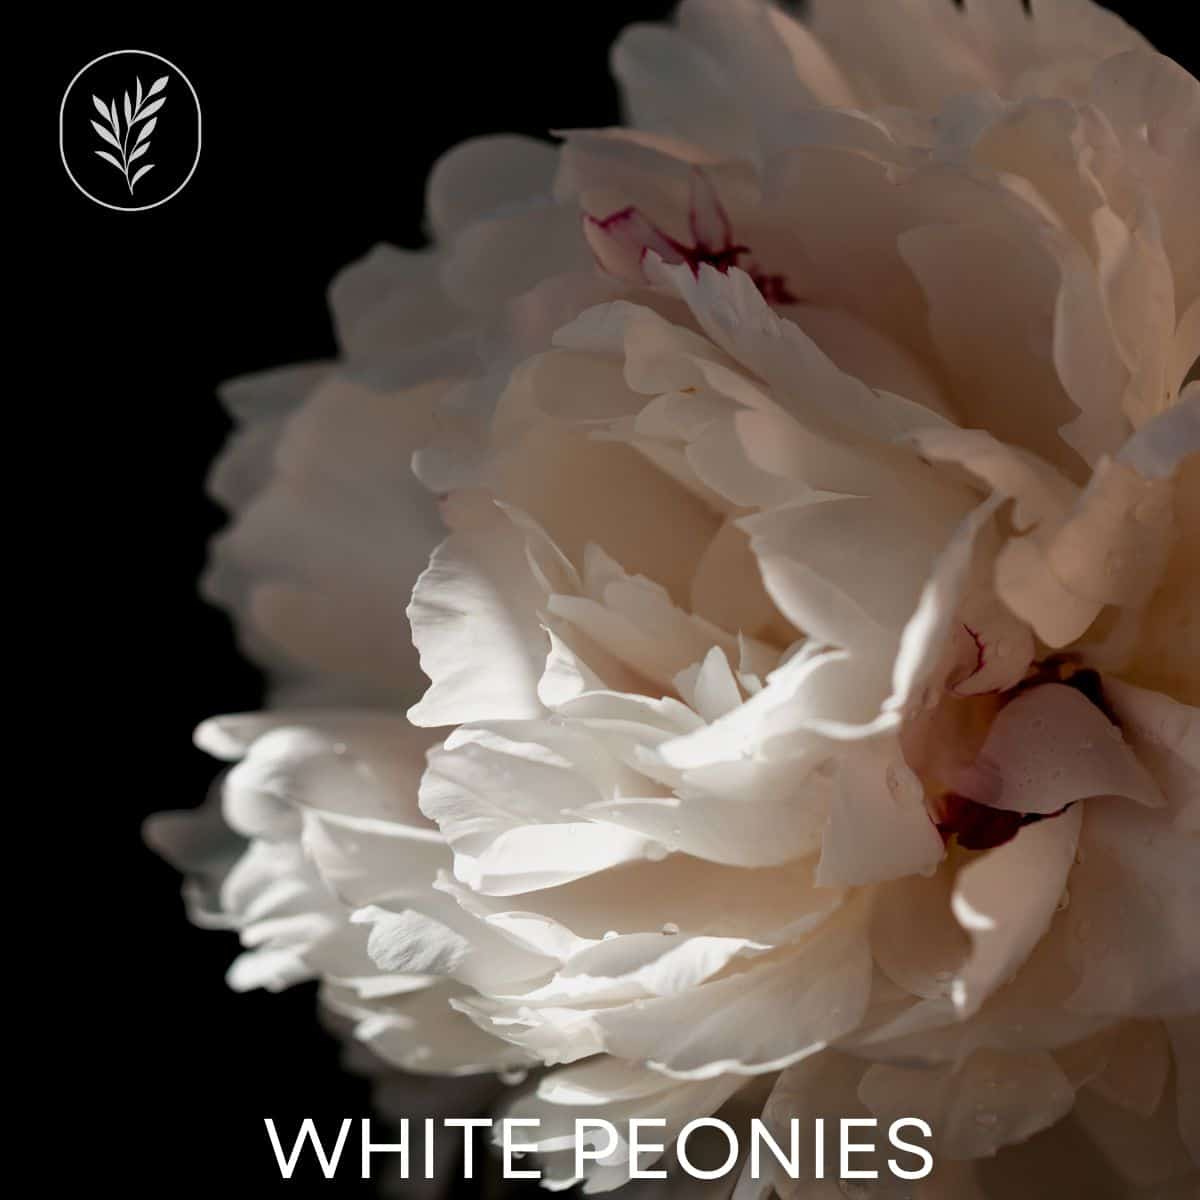 White peonies via @home4theharvest